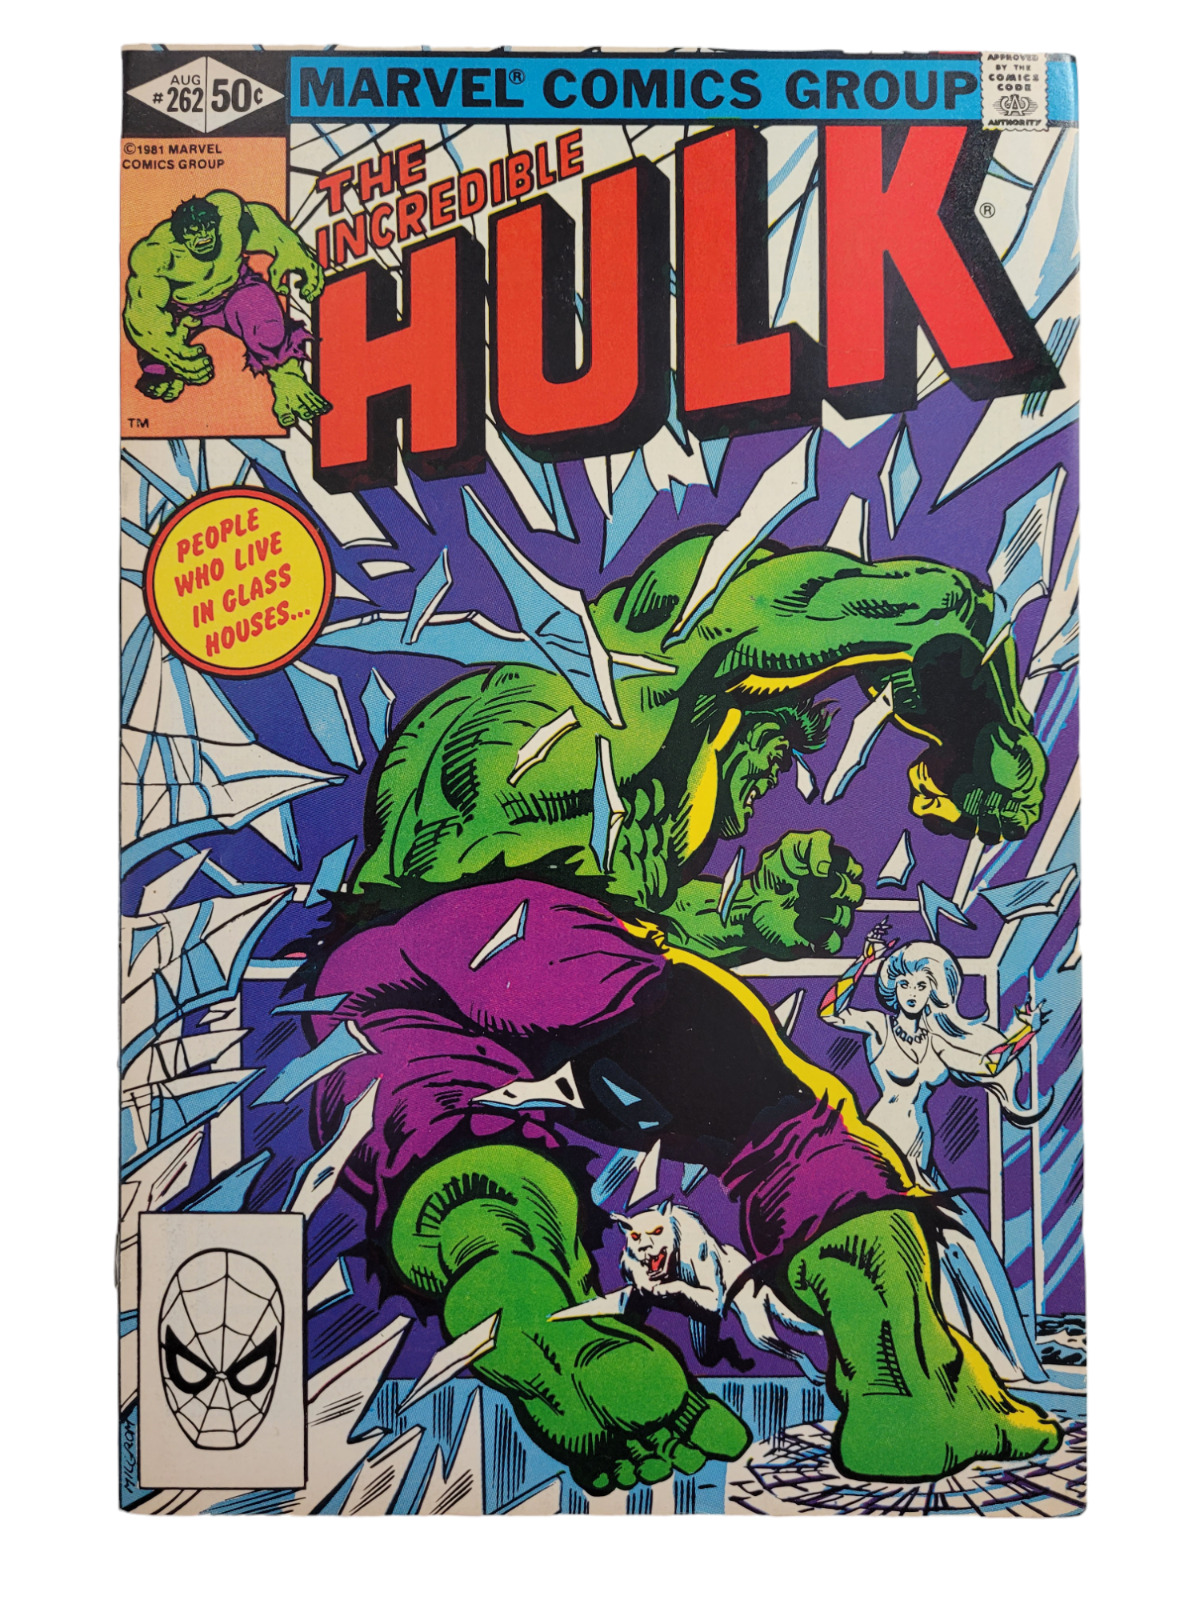 The Incredible Hulk #262 - Glass Houses 1981 VF-/VF range Raw Vintage Marvel